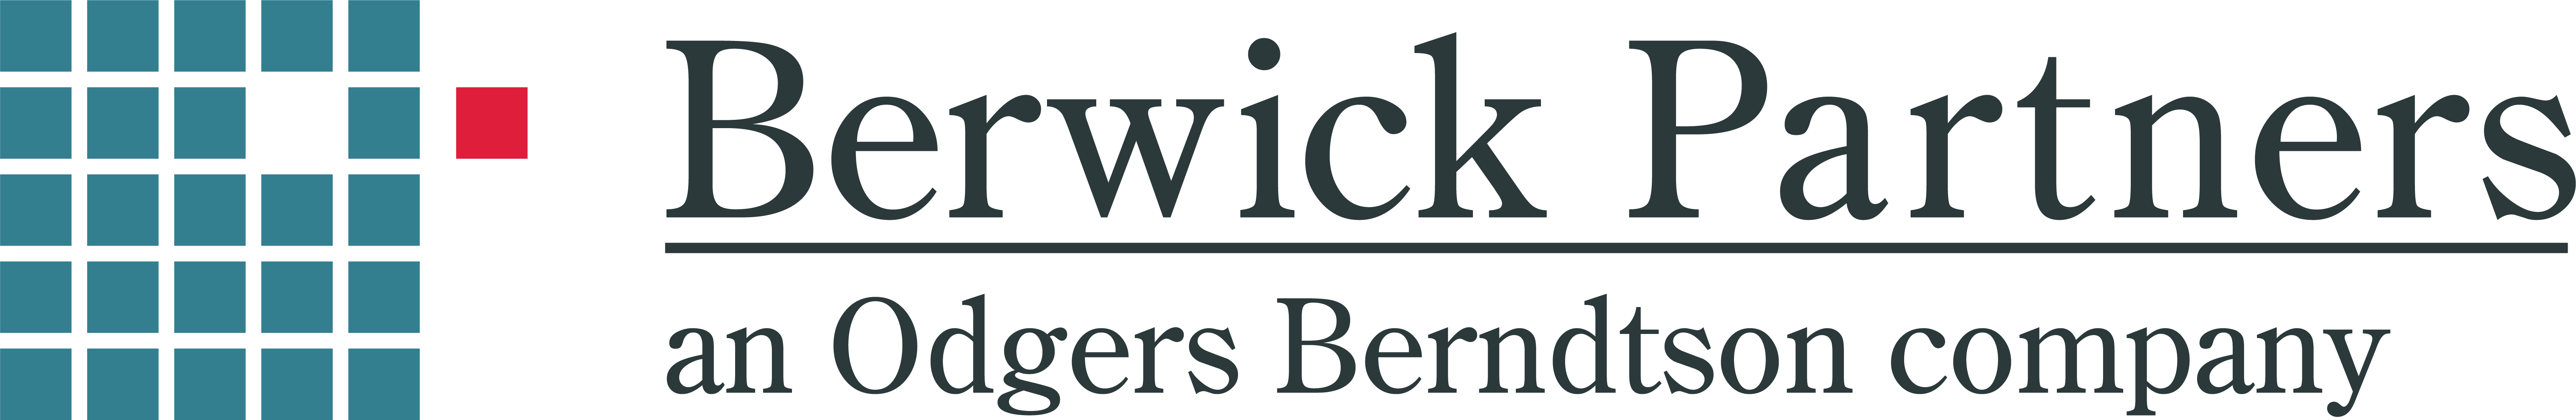 Berwick Partners